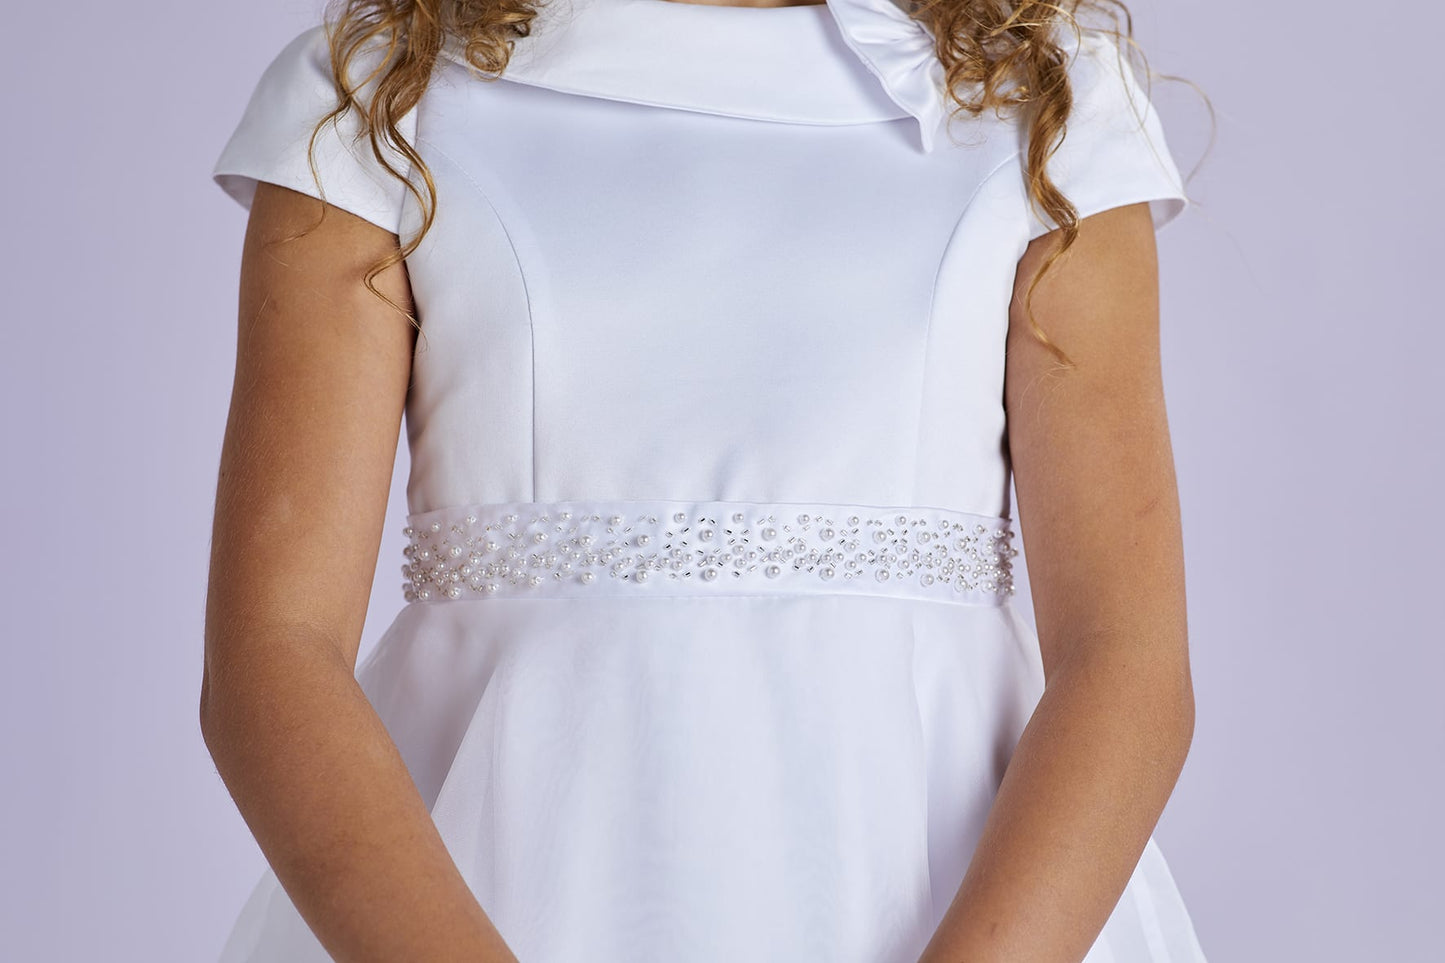 Claudia Holy Communion Dress White SALE